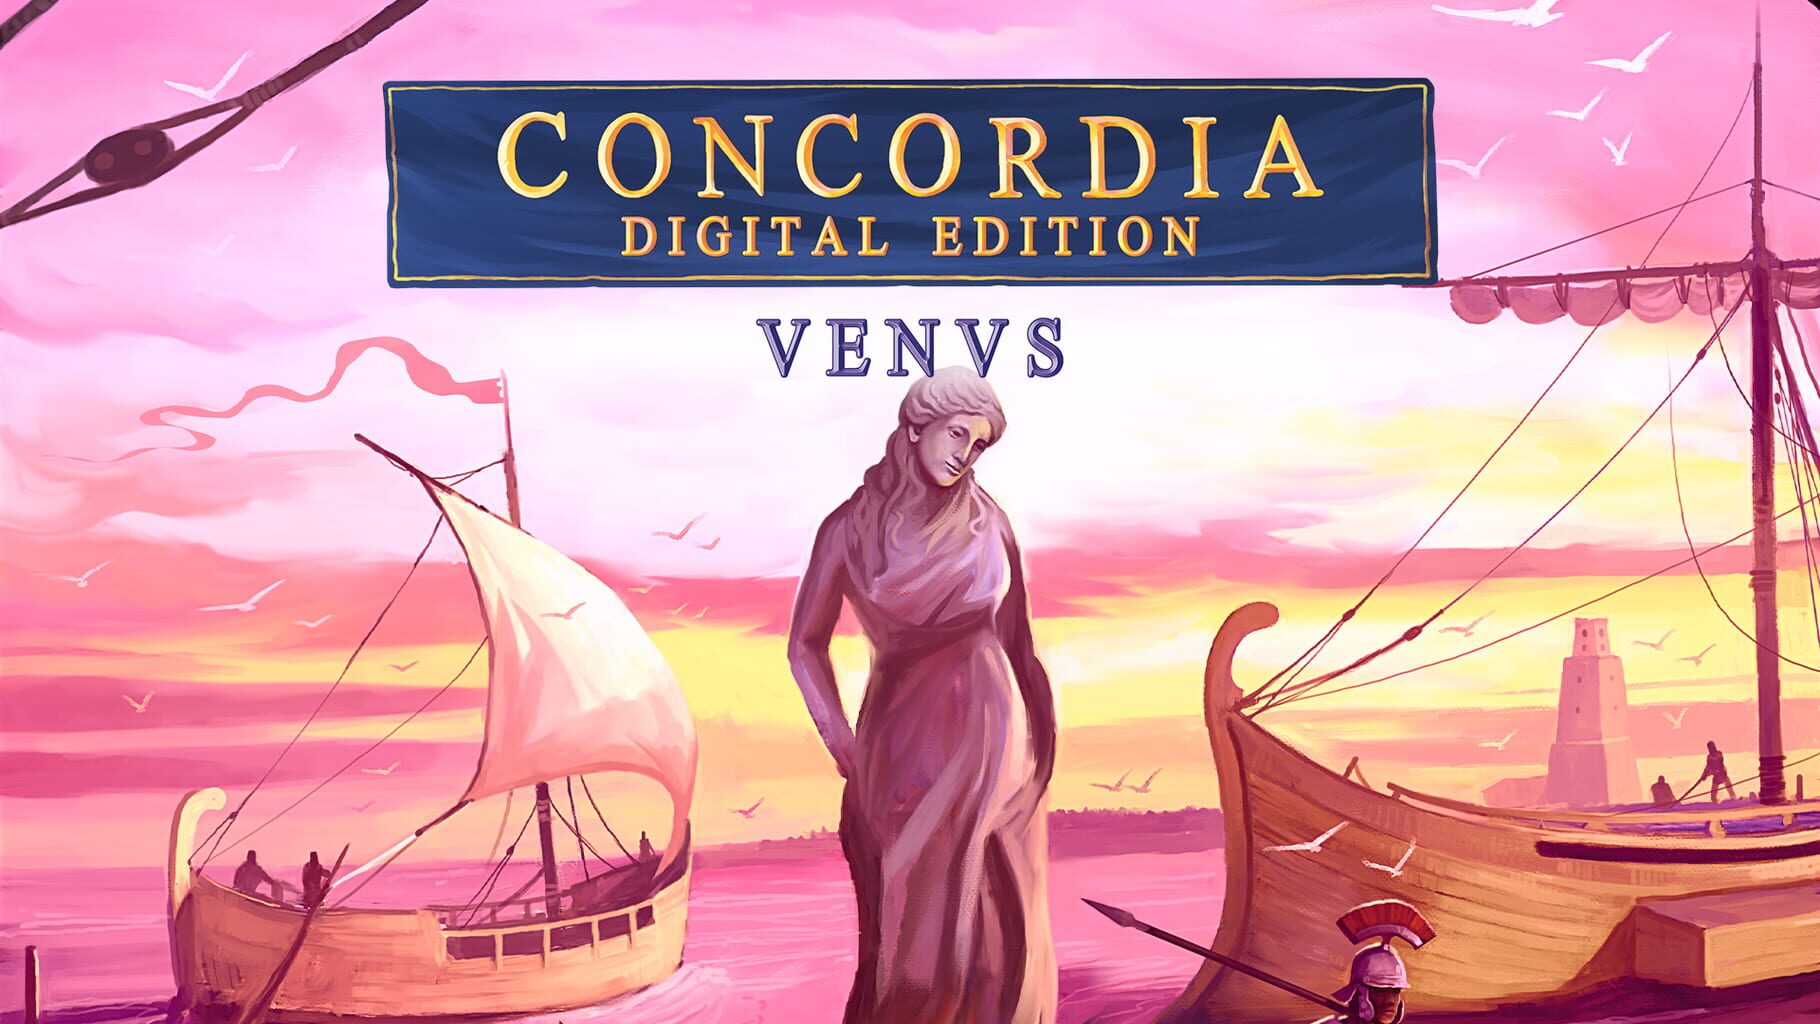 Concordia: Digital Edition - Venus artwork